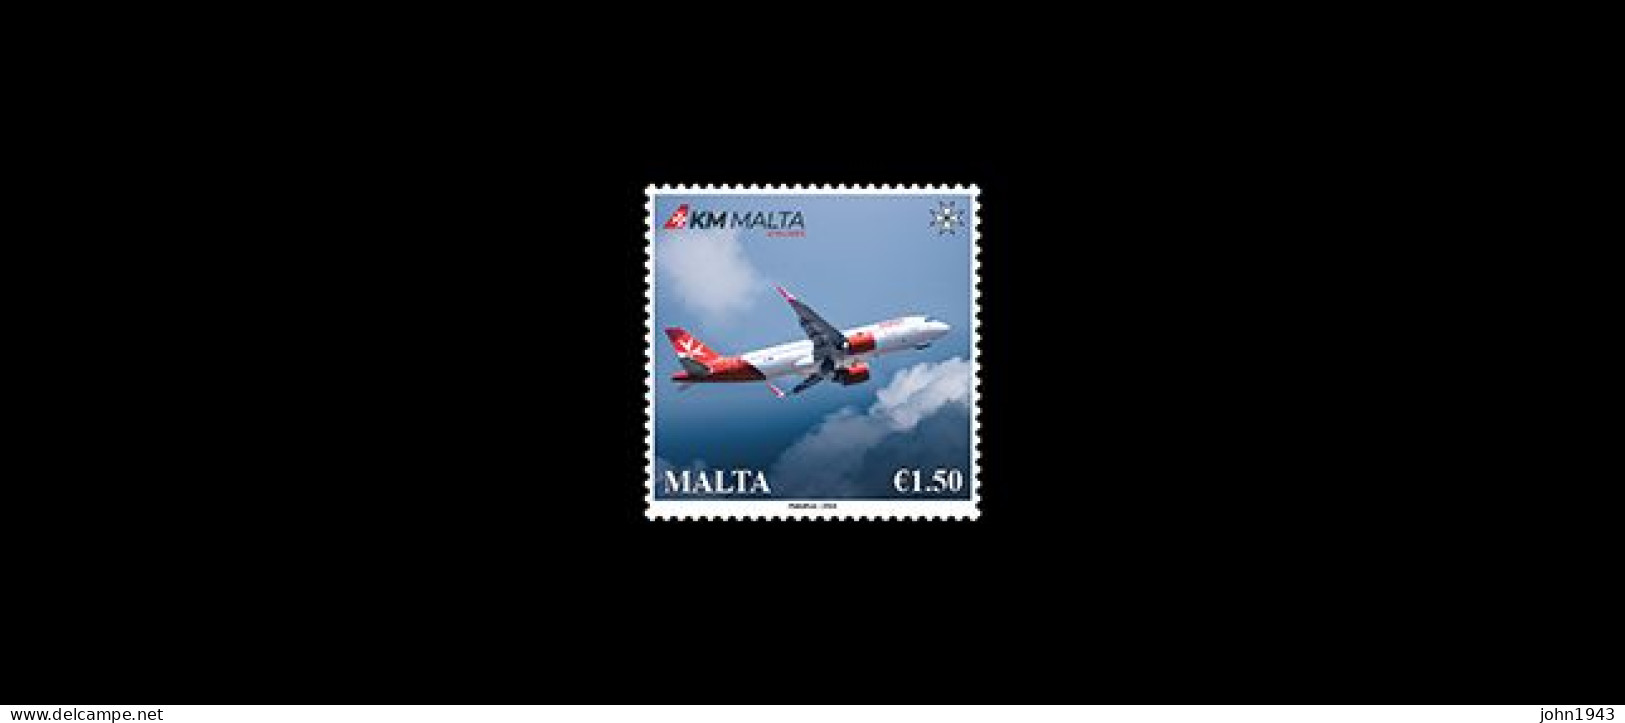 MALTA 2024 KM Malta Airlines SET OF THREE STAMPS MINT NH SUPER - Malta